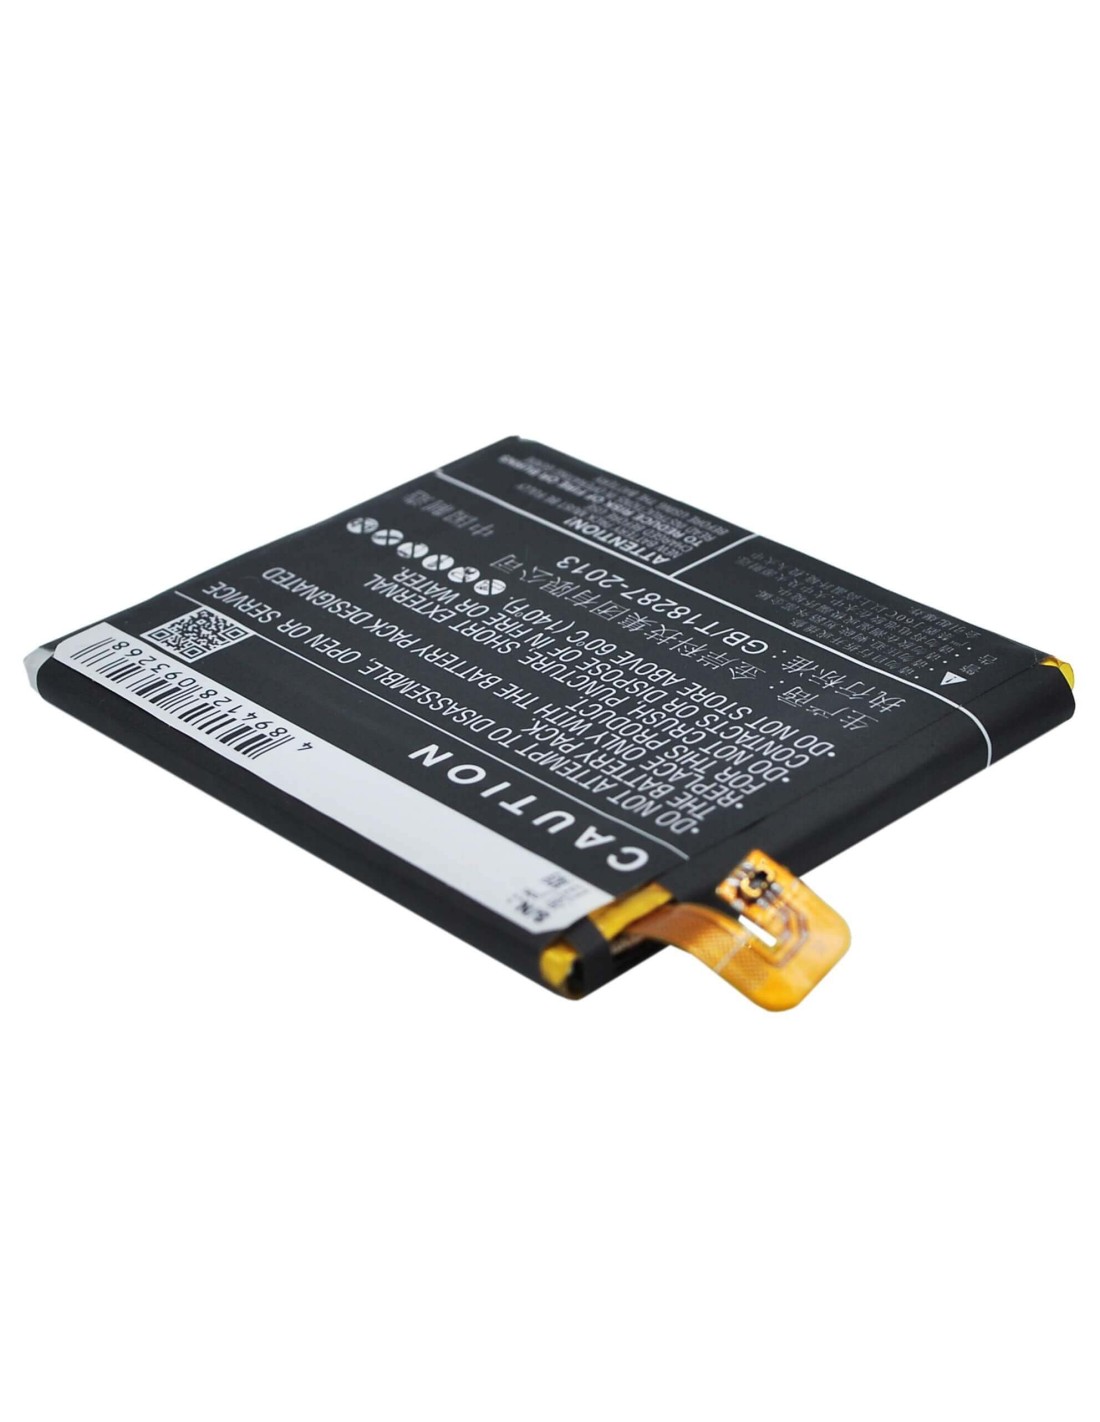 Battery for Xiaomi 4, Mi4, Mi4 4G 3.8V, 3000mAh - 11.40Wh